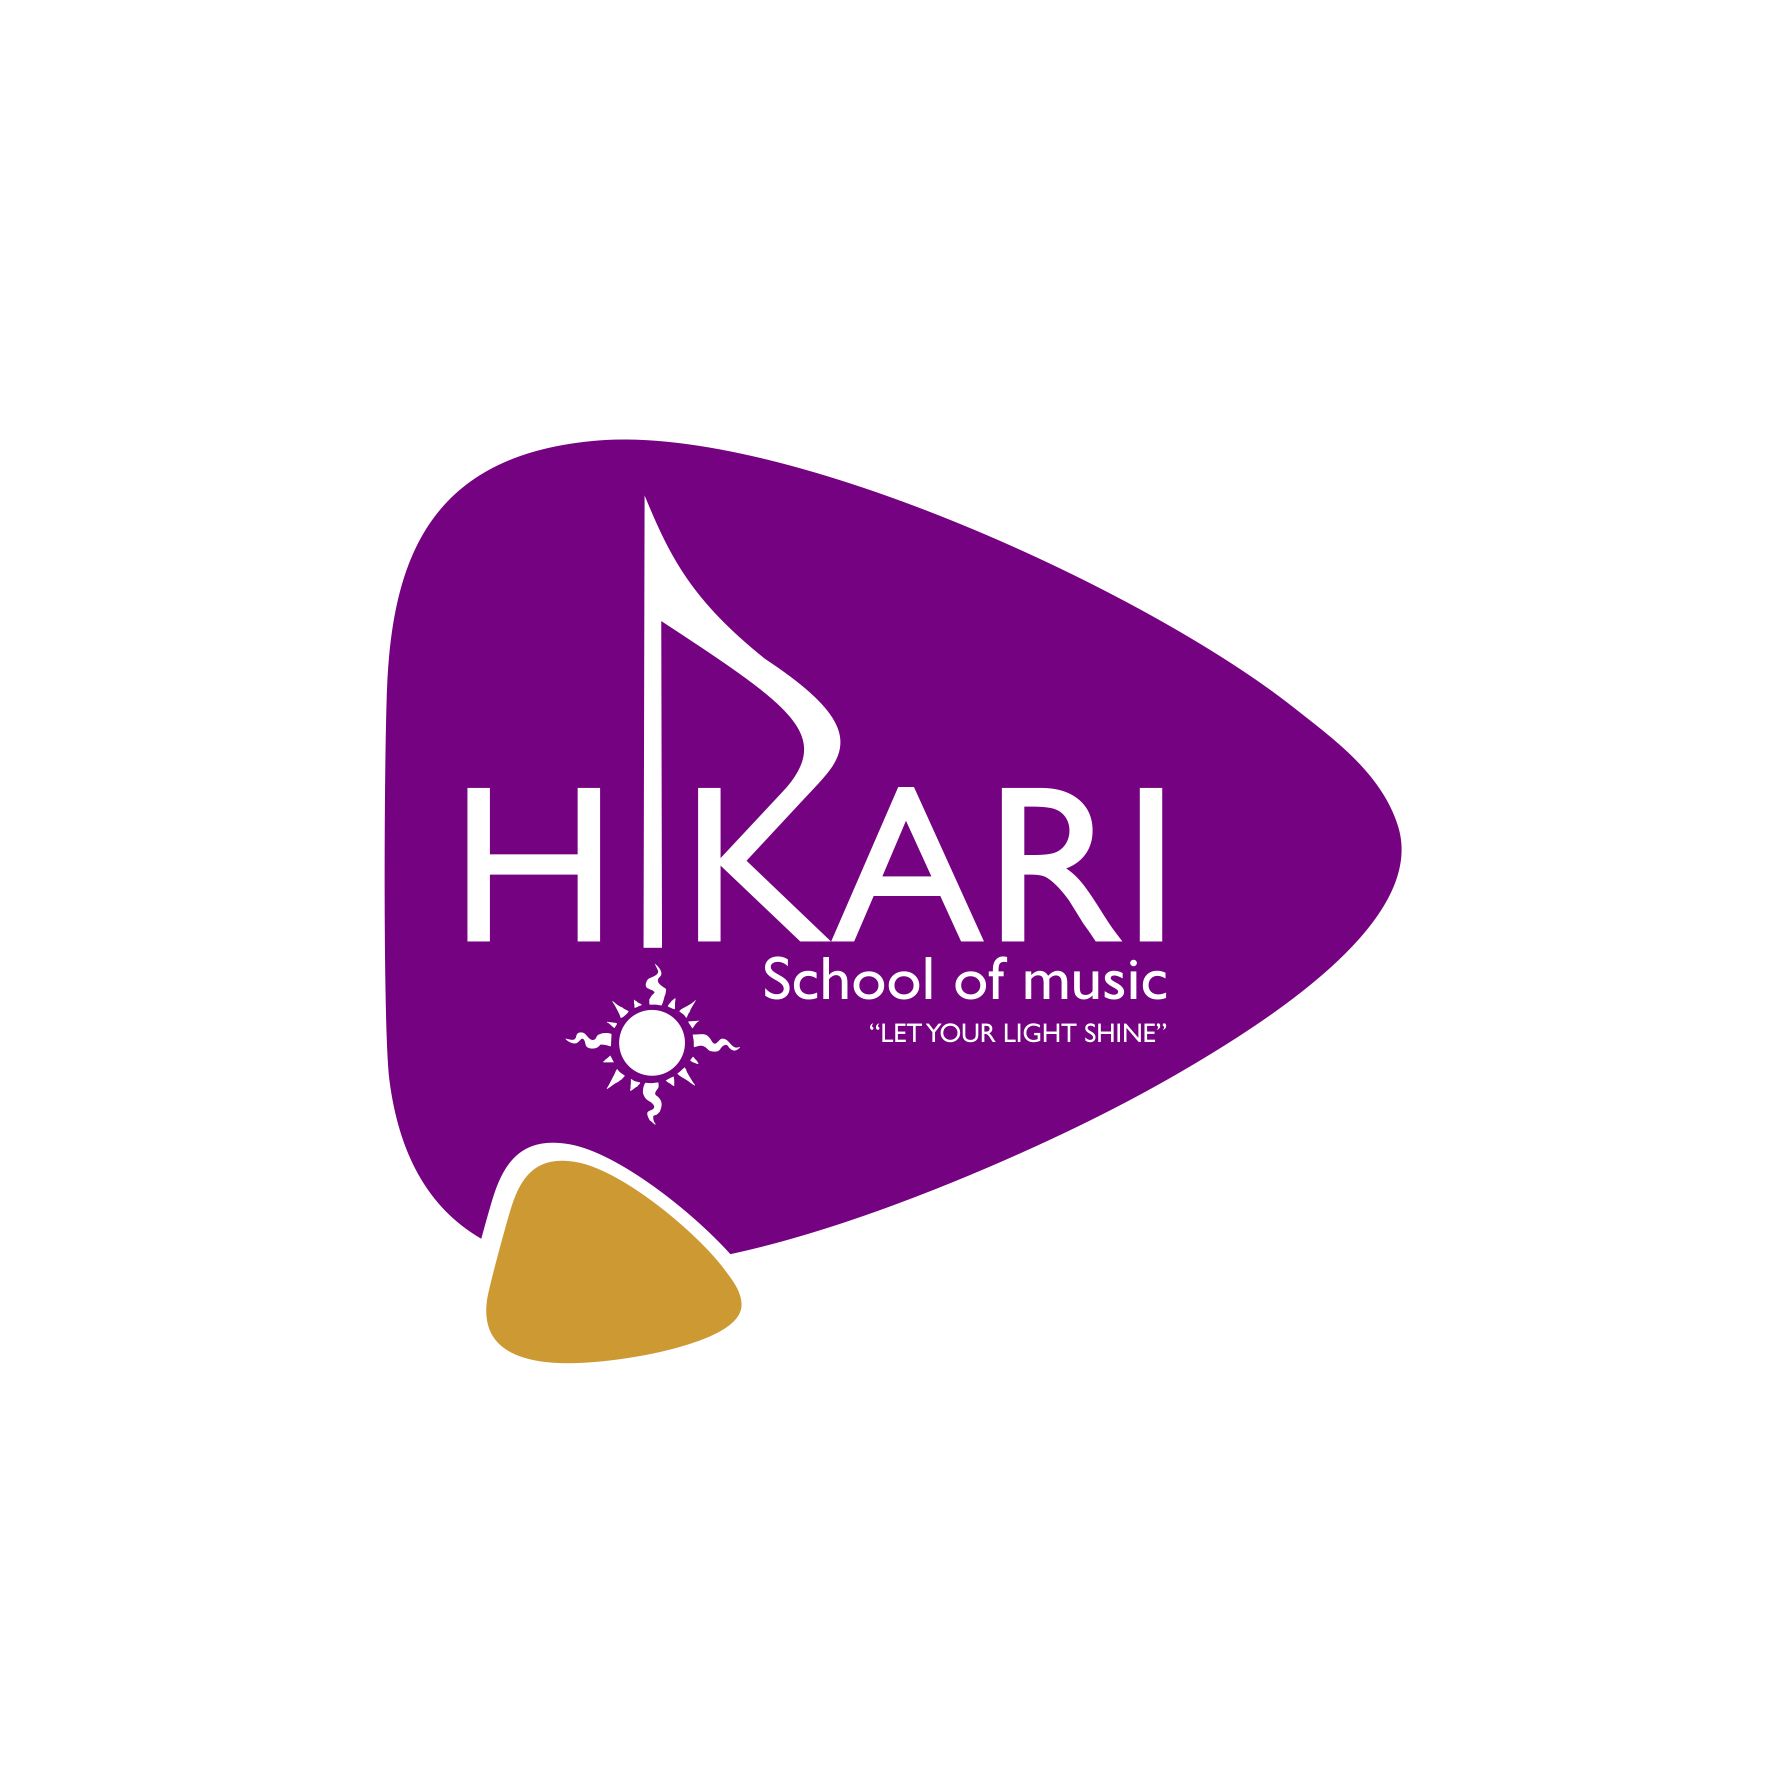 HIKARI School of Music